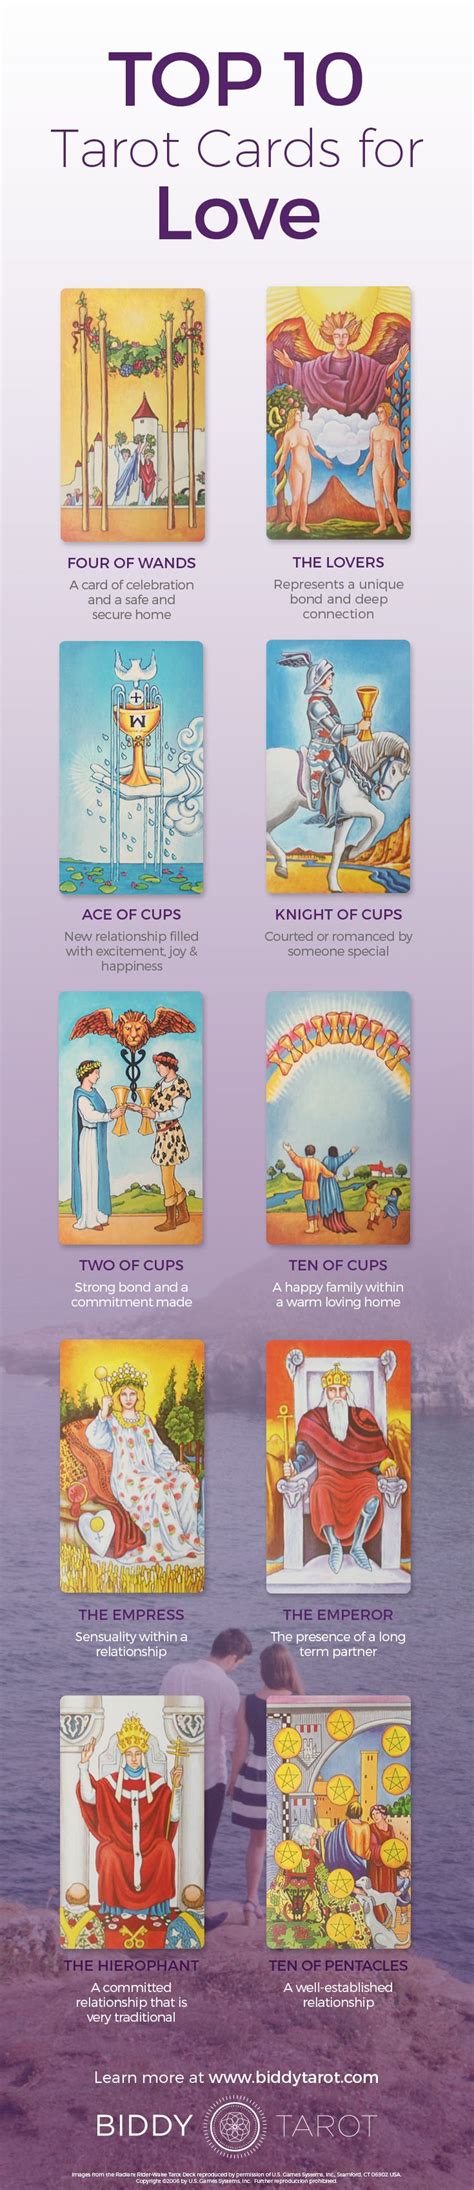 Each card has its own meaning and interpretation. Top 10 Love Tarot Cards | Biddy Tarot Blog | Love tarot, Biddy tarot, Love tarot card